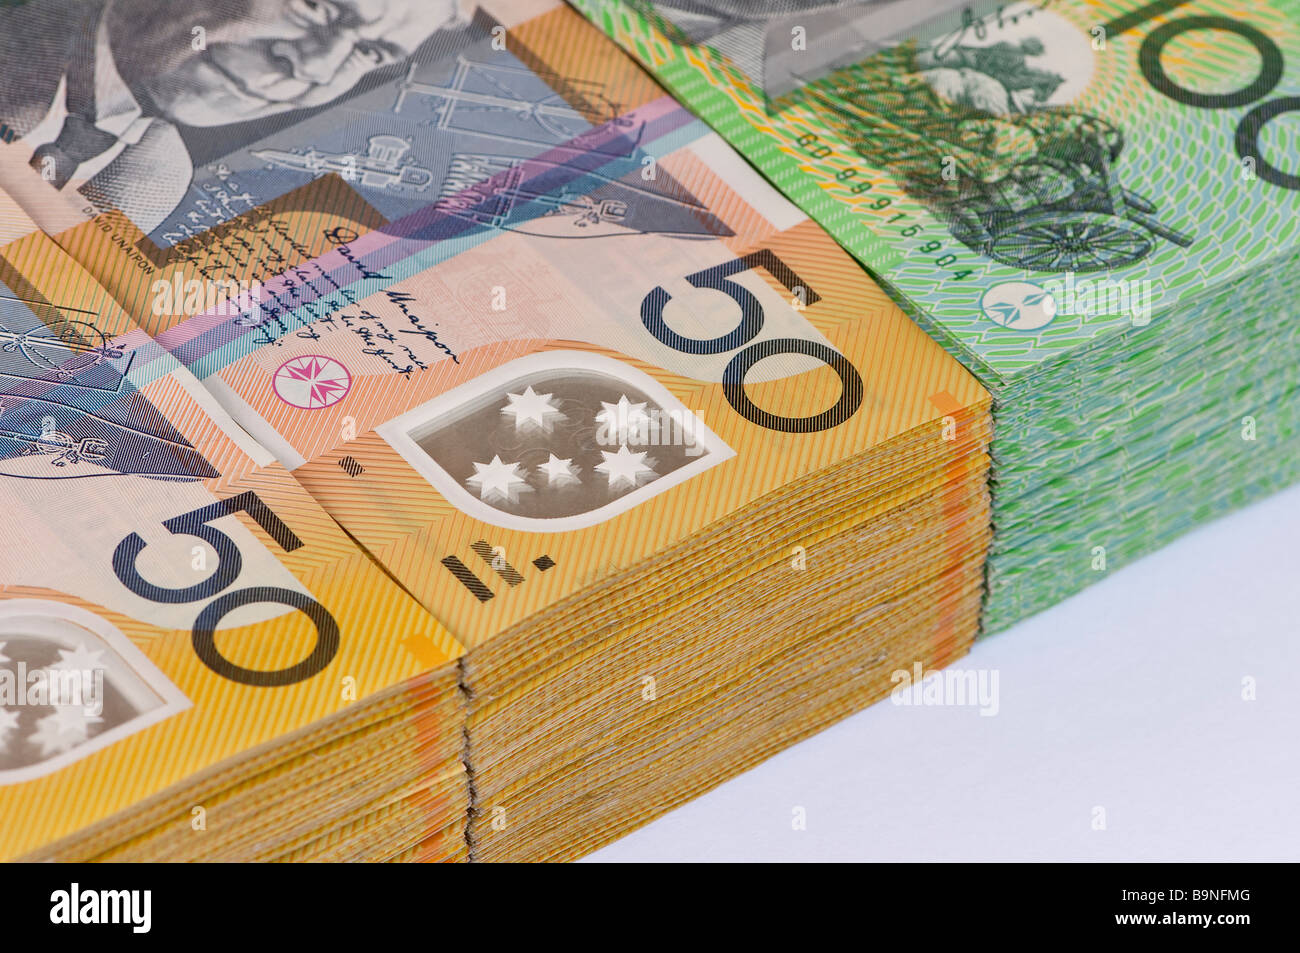 buy bhp share australian dollars